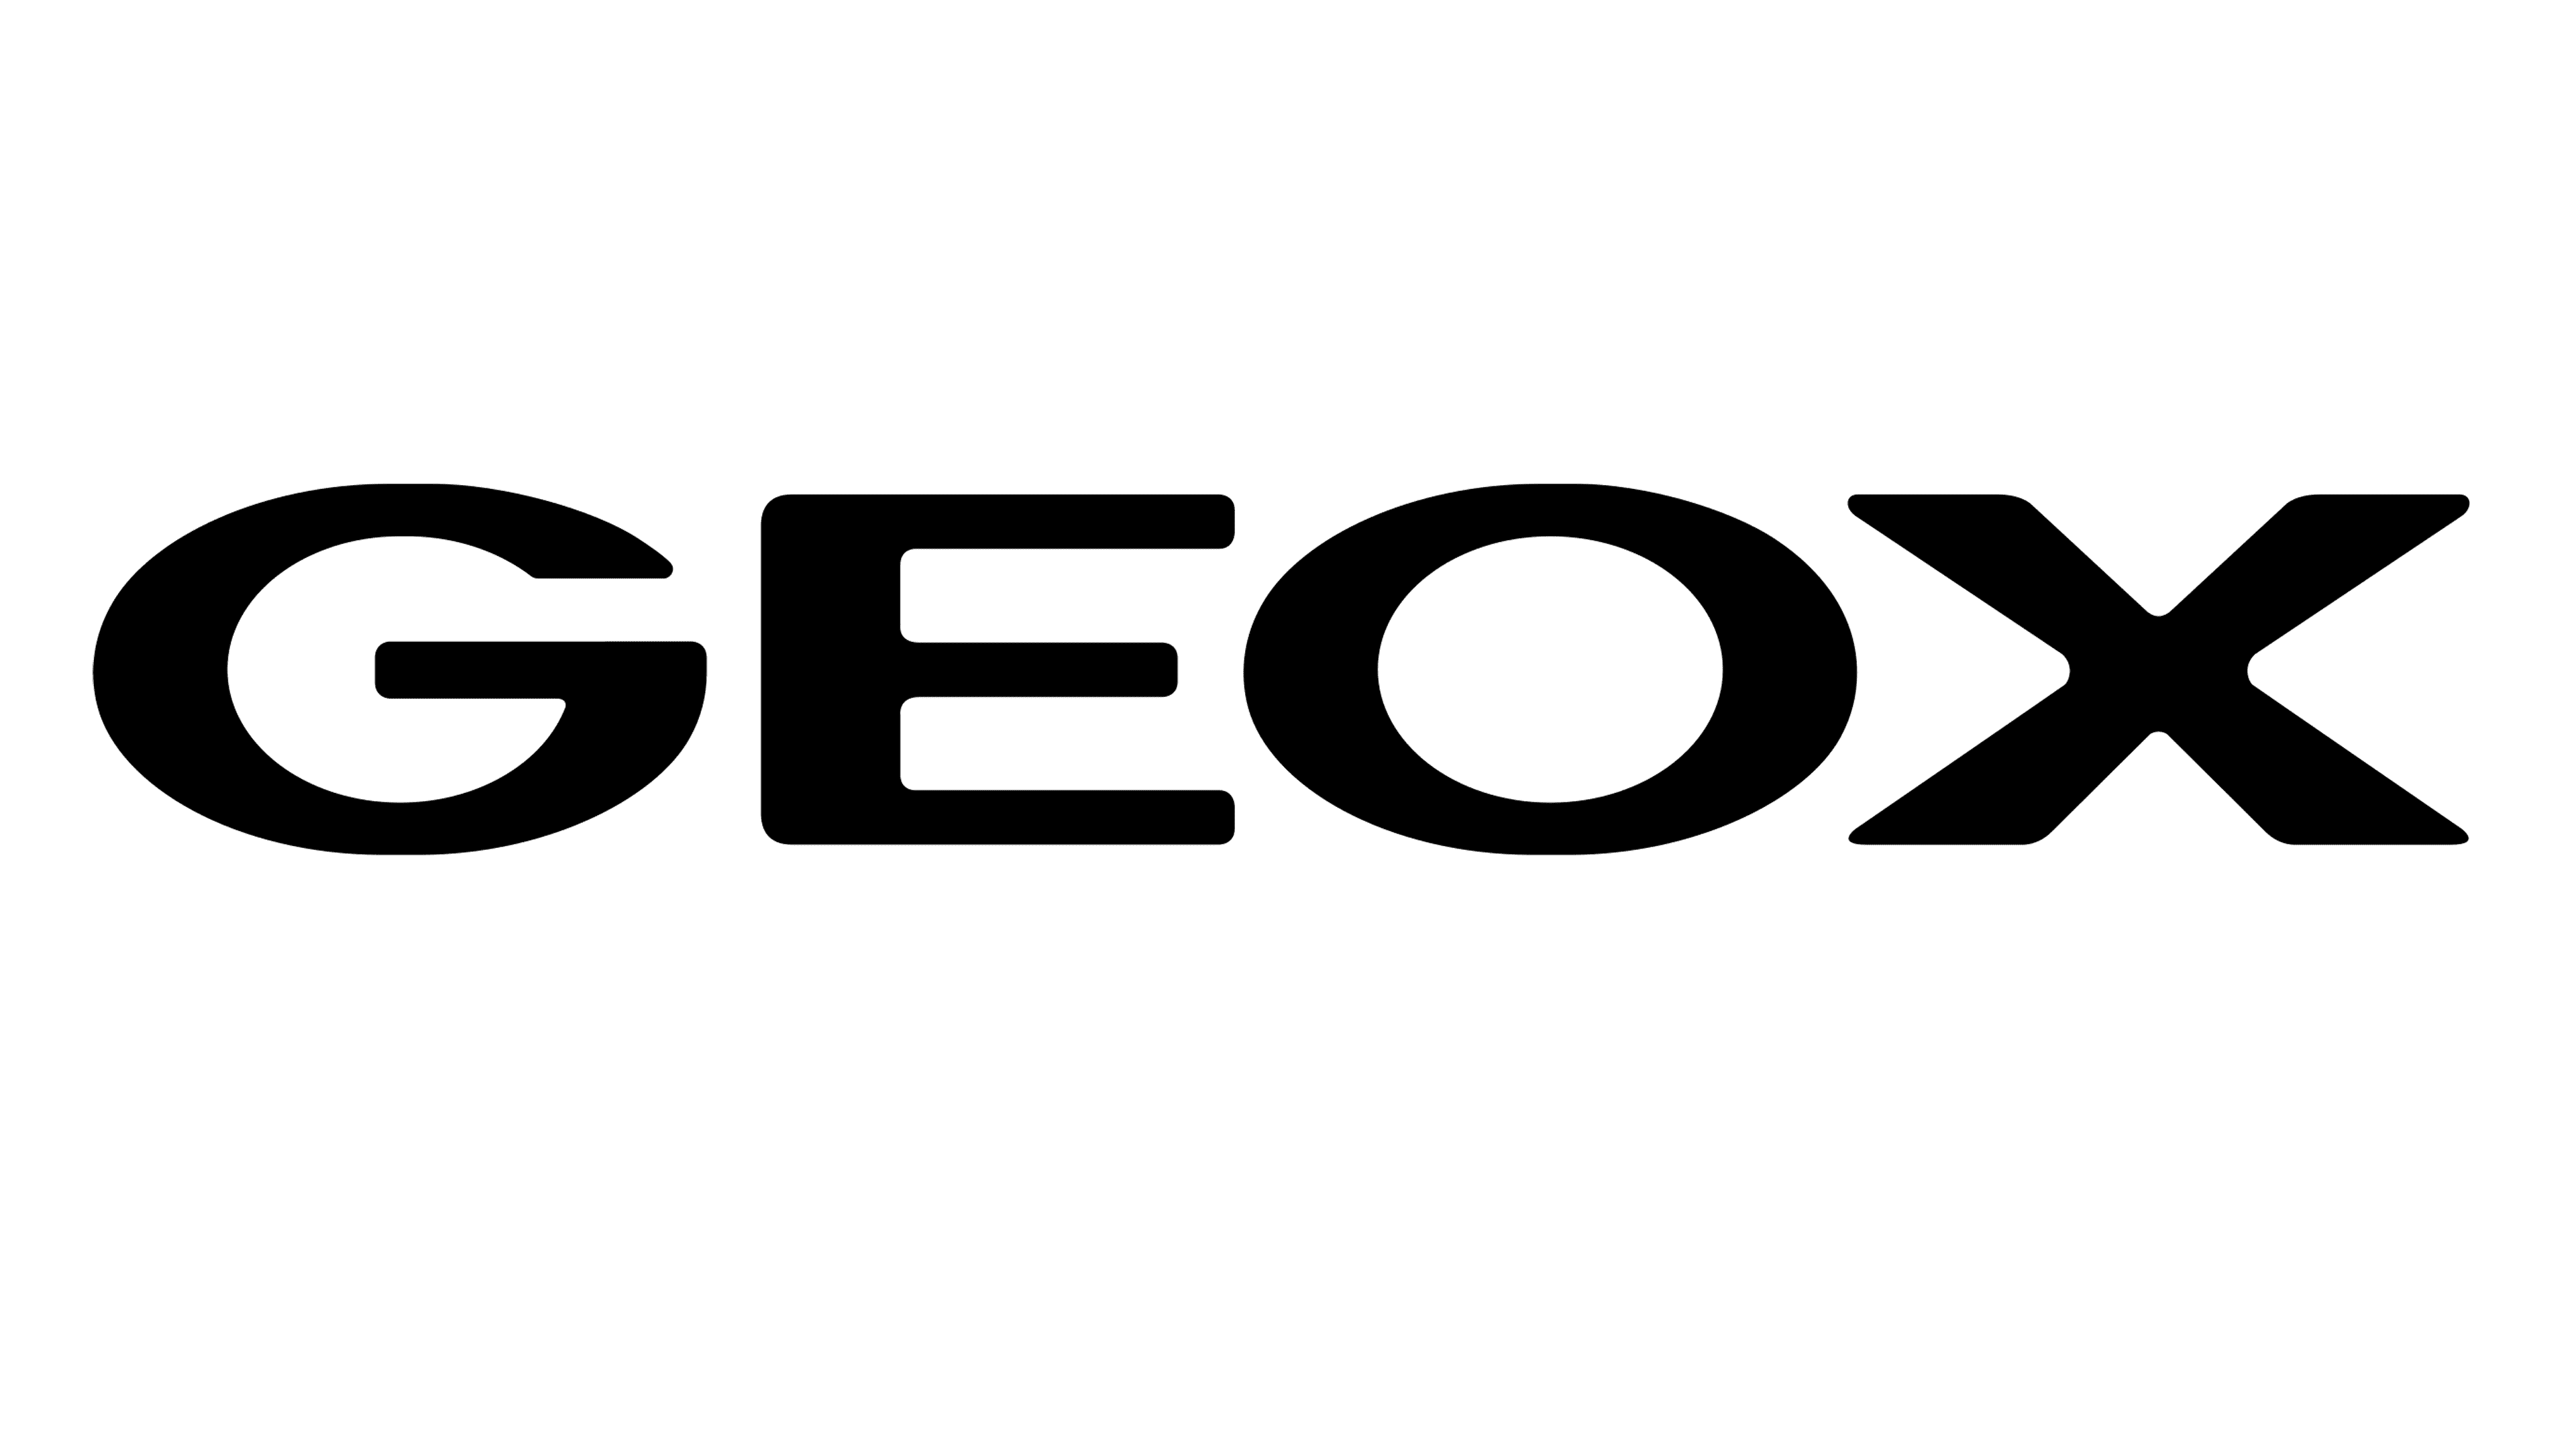 Geox UK